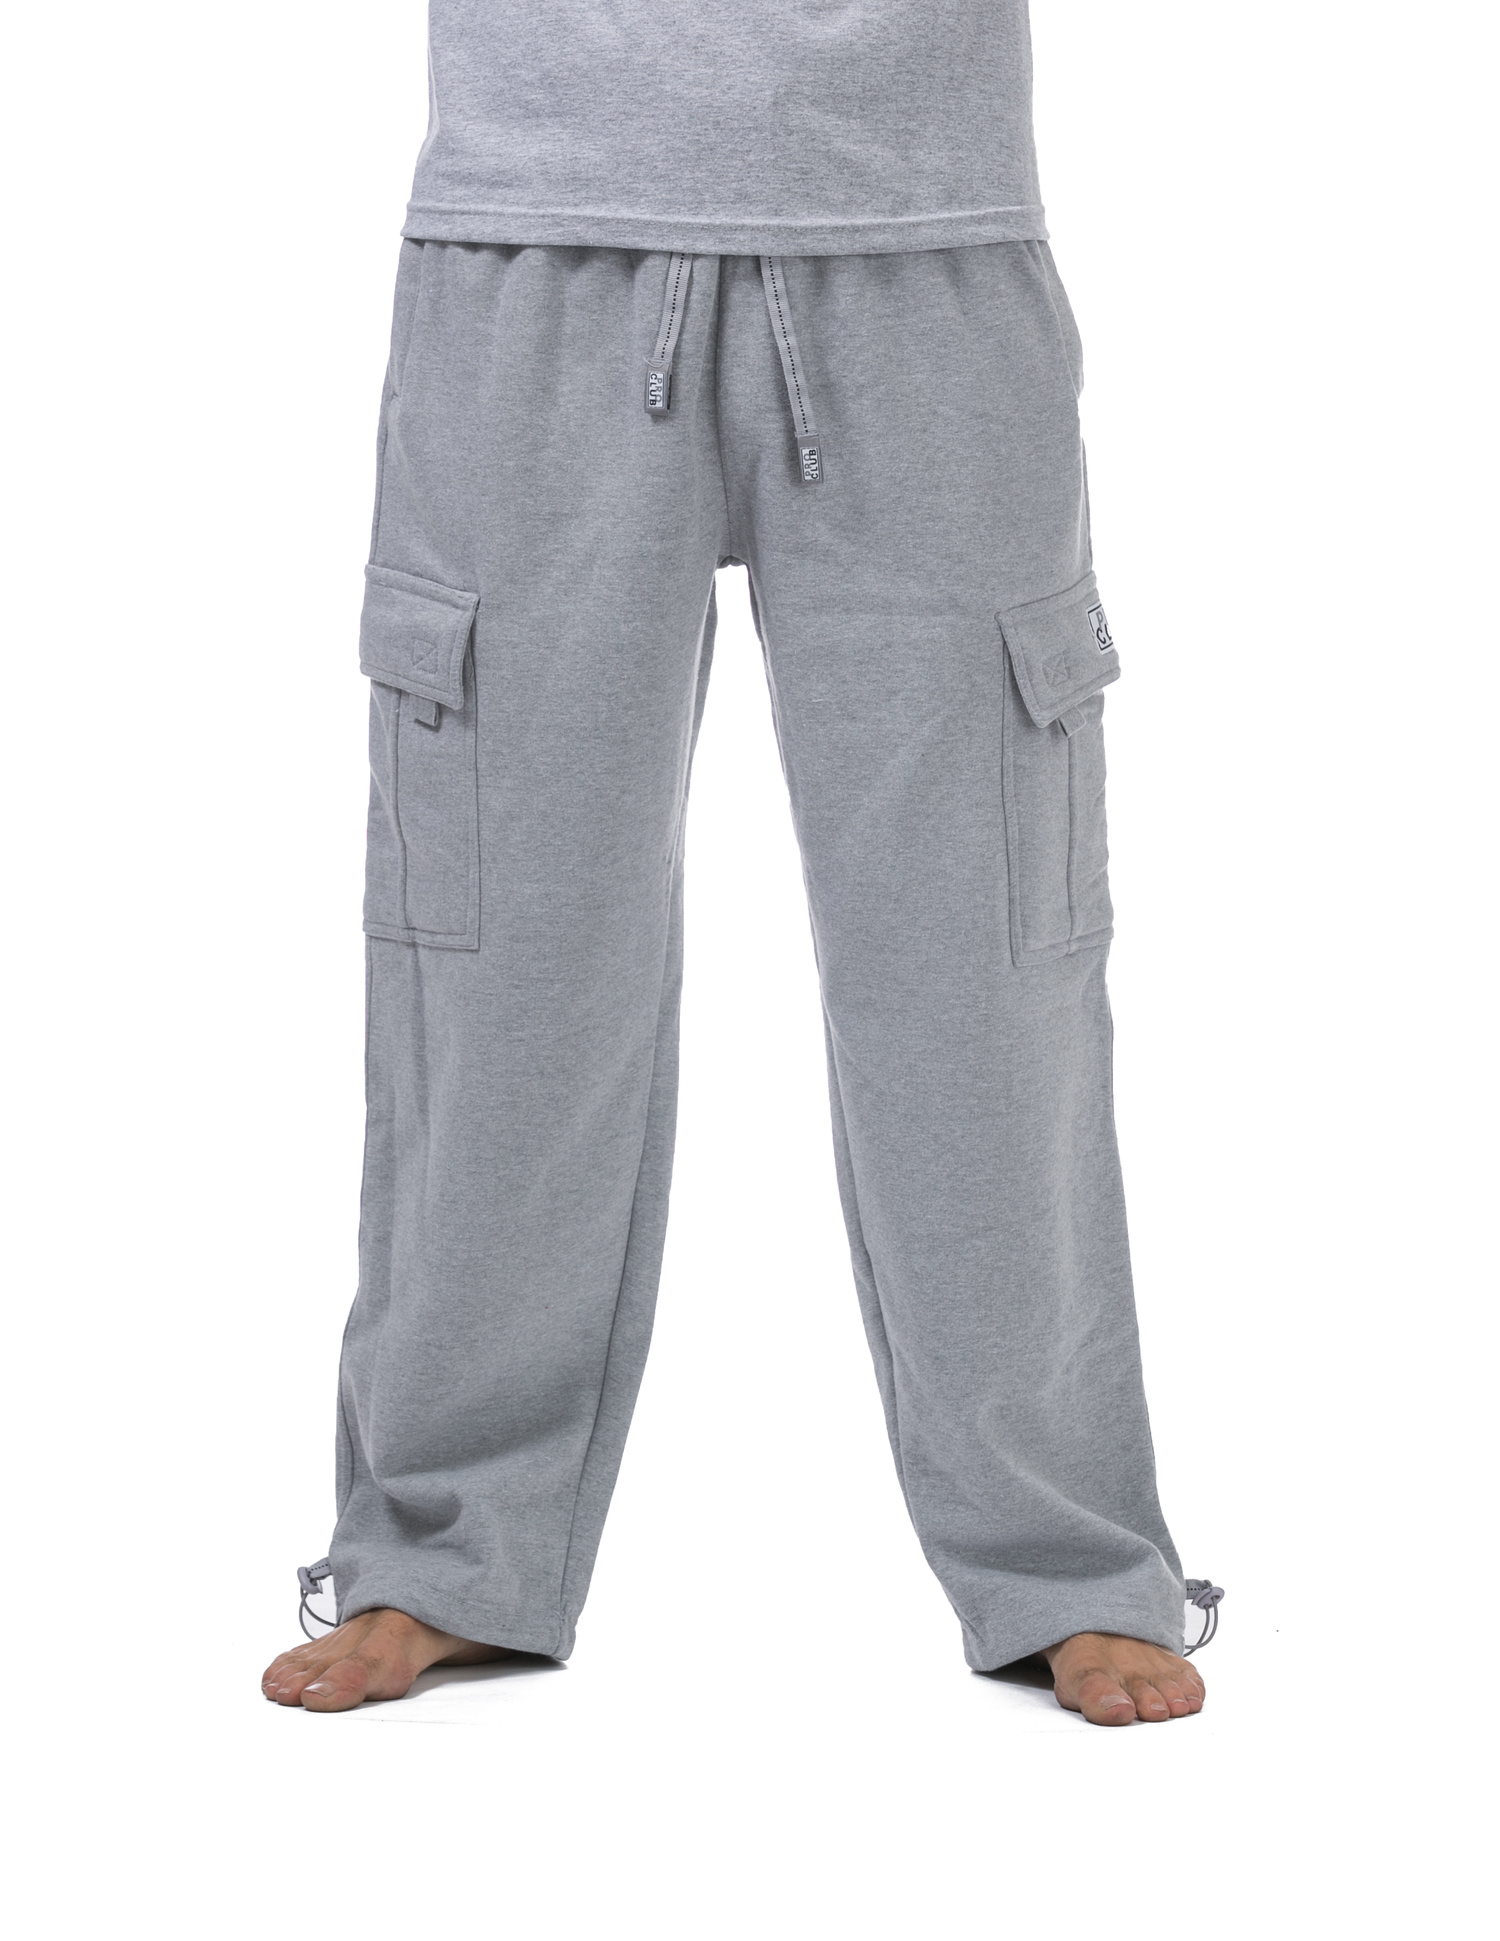 Pro Club Men's Heavyweight Fleece Cargo Pants, Medium, Charcoal